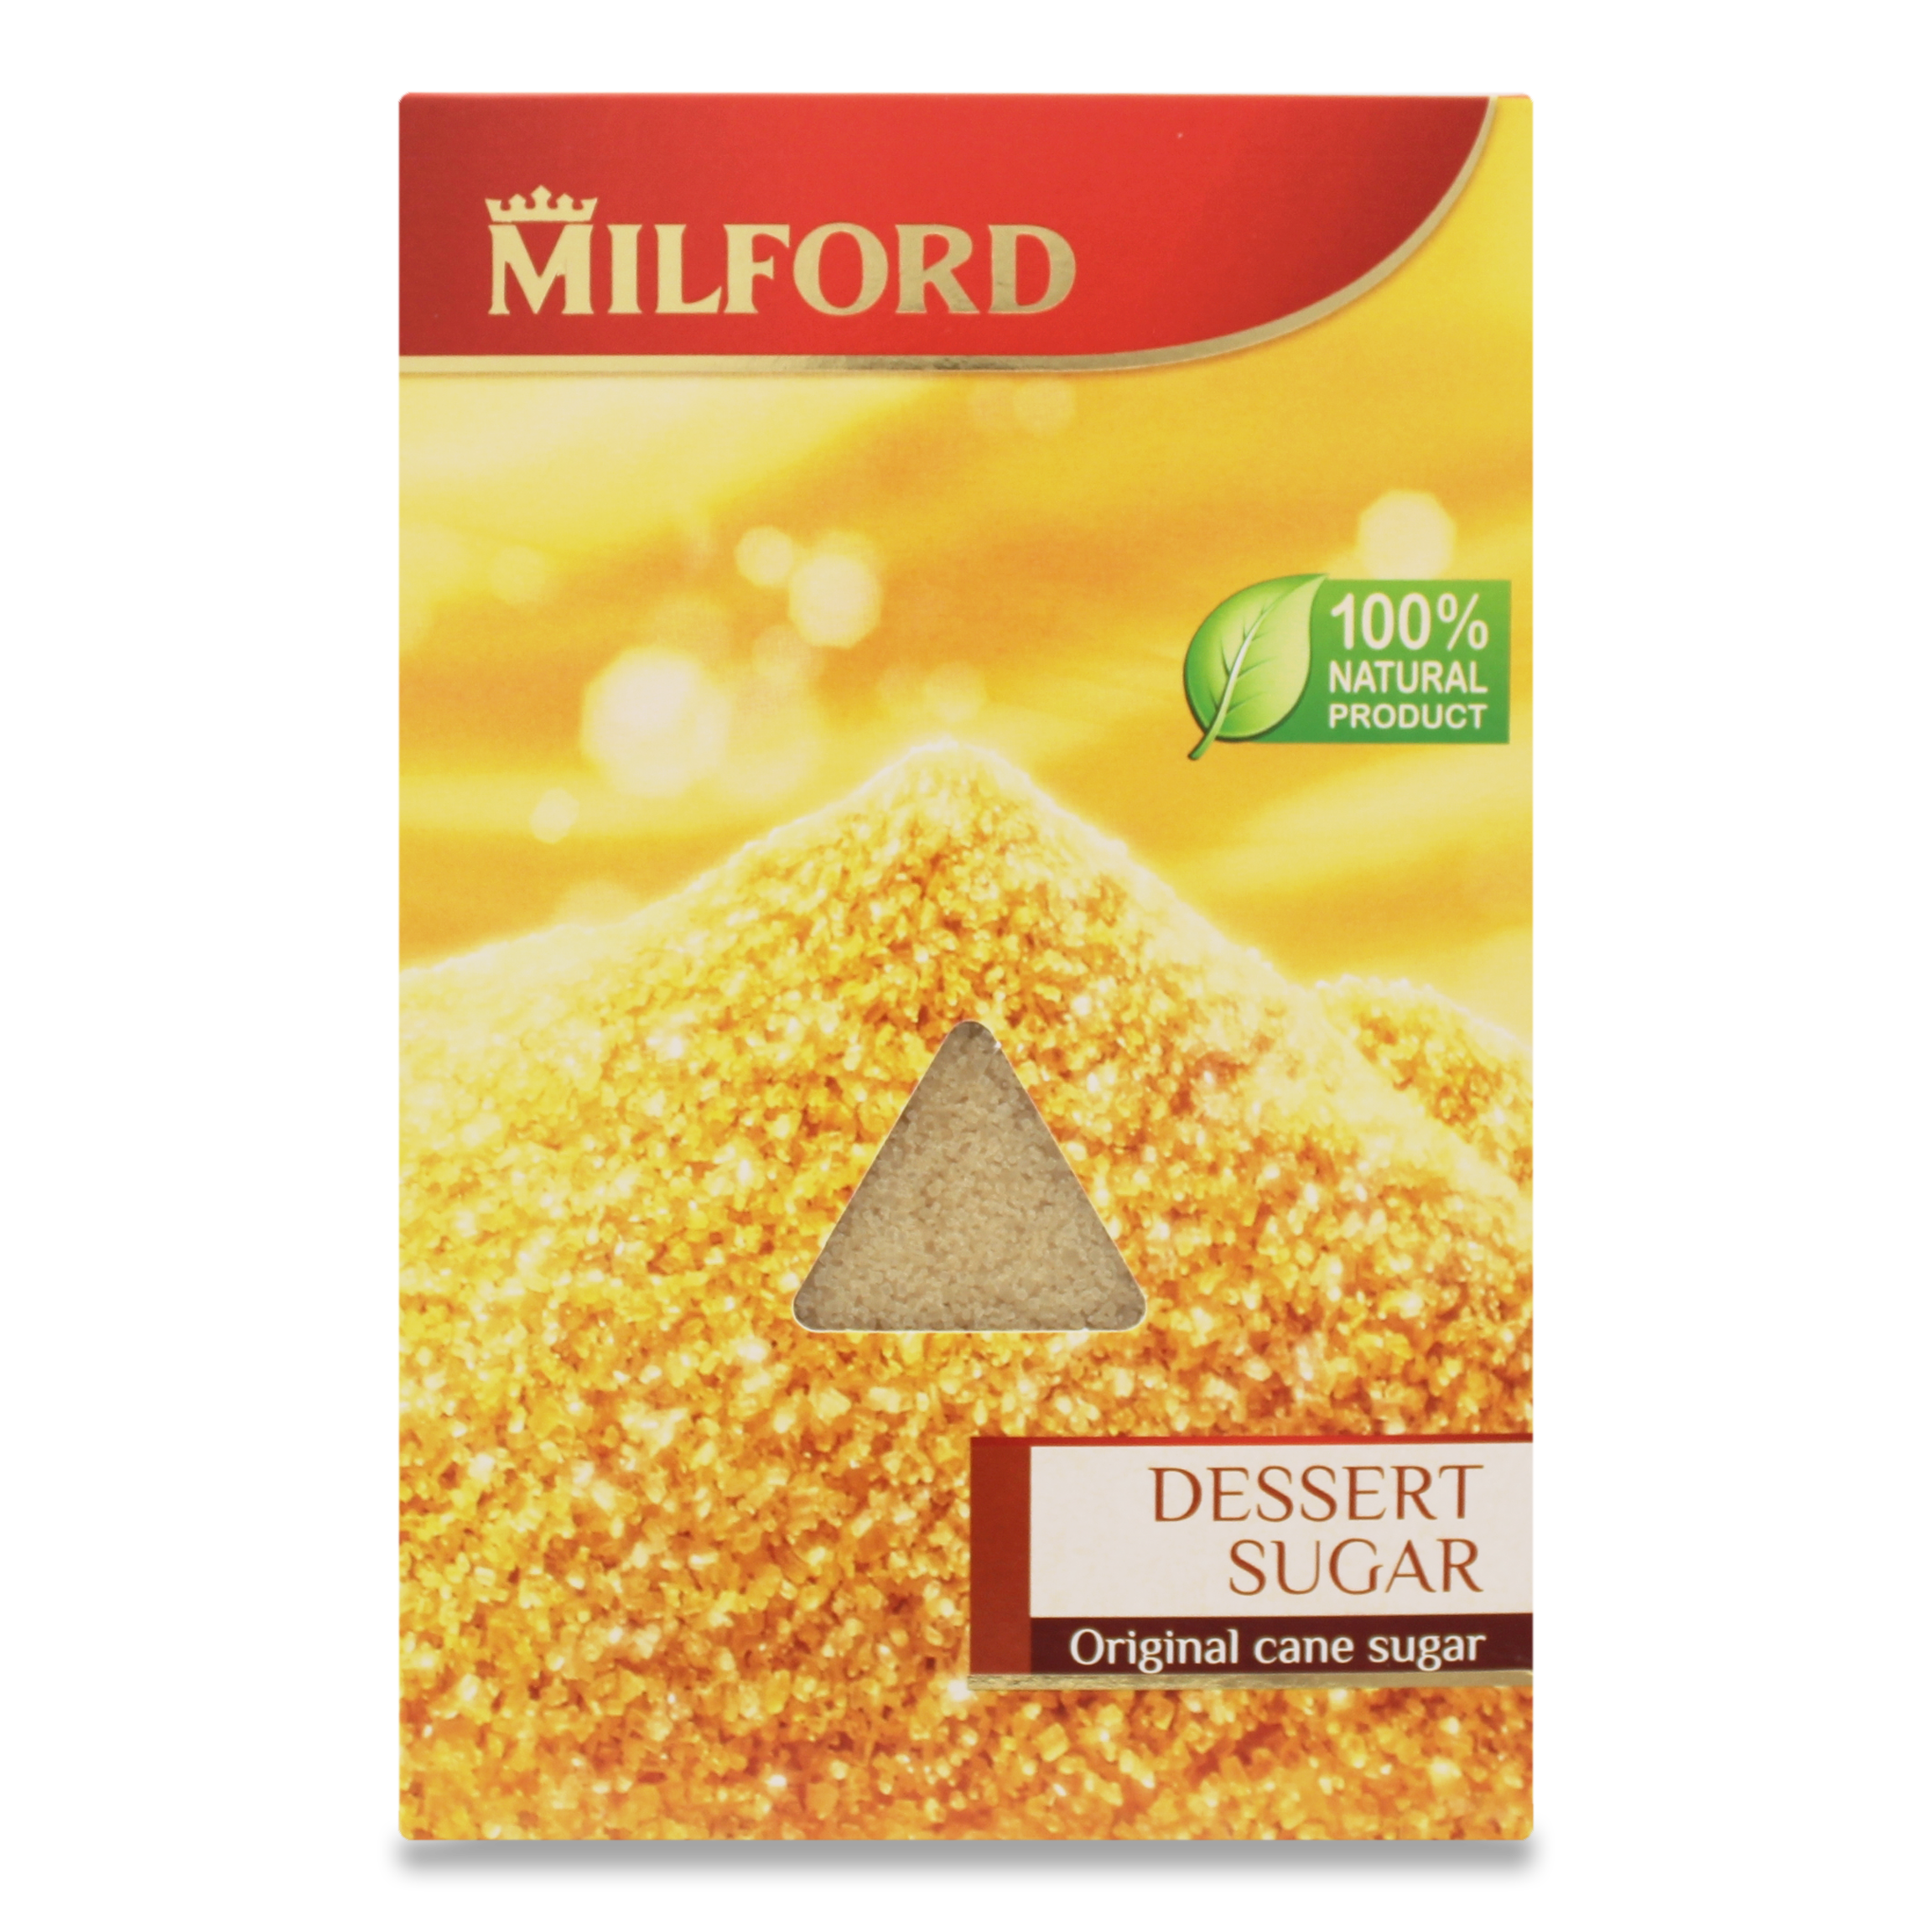 Milford cane granulated dessert sugar 500g